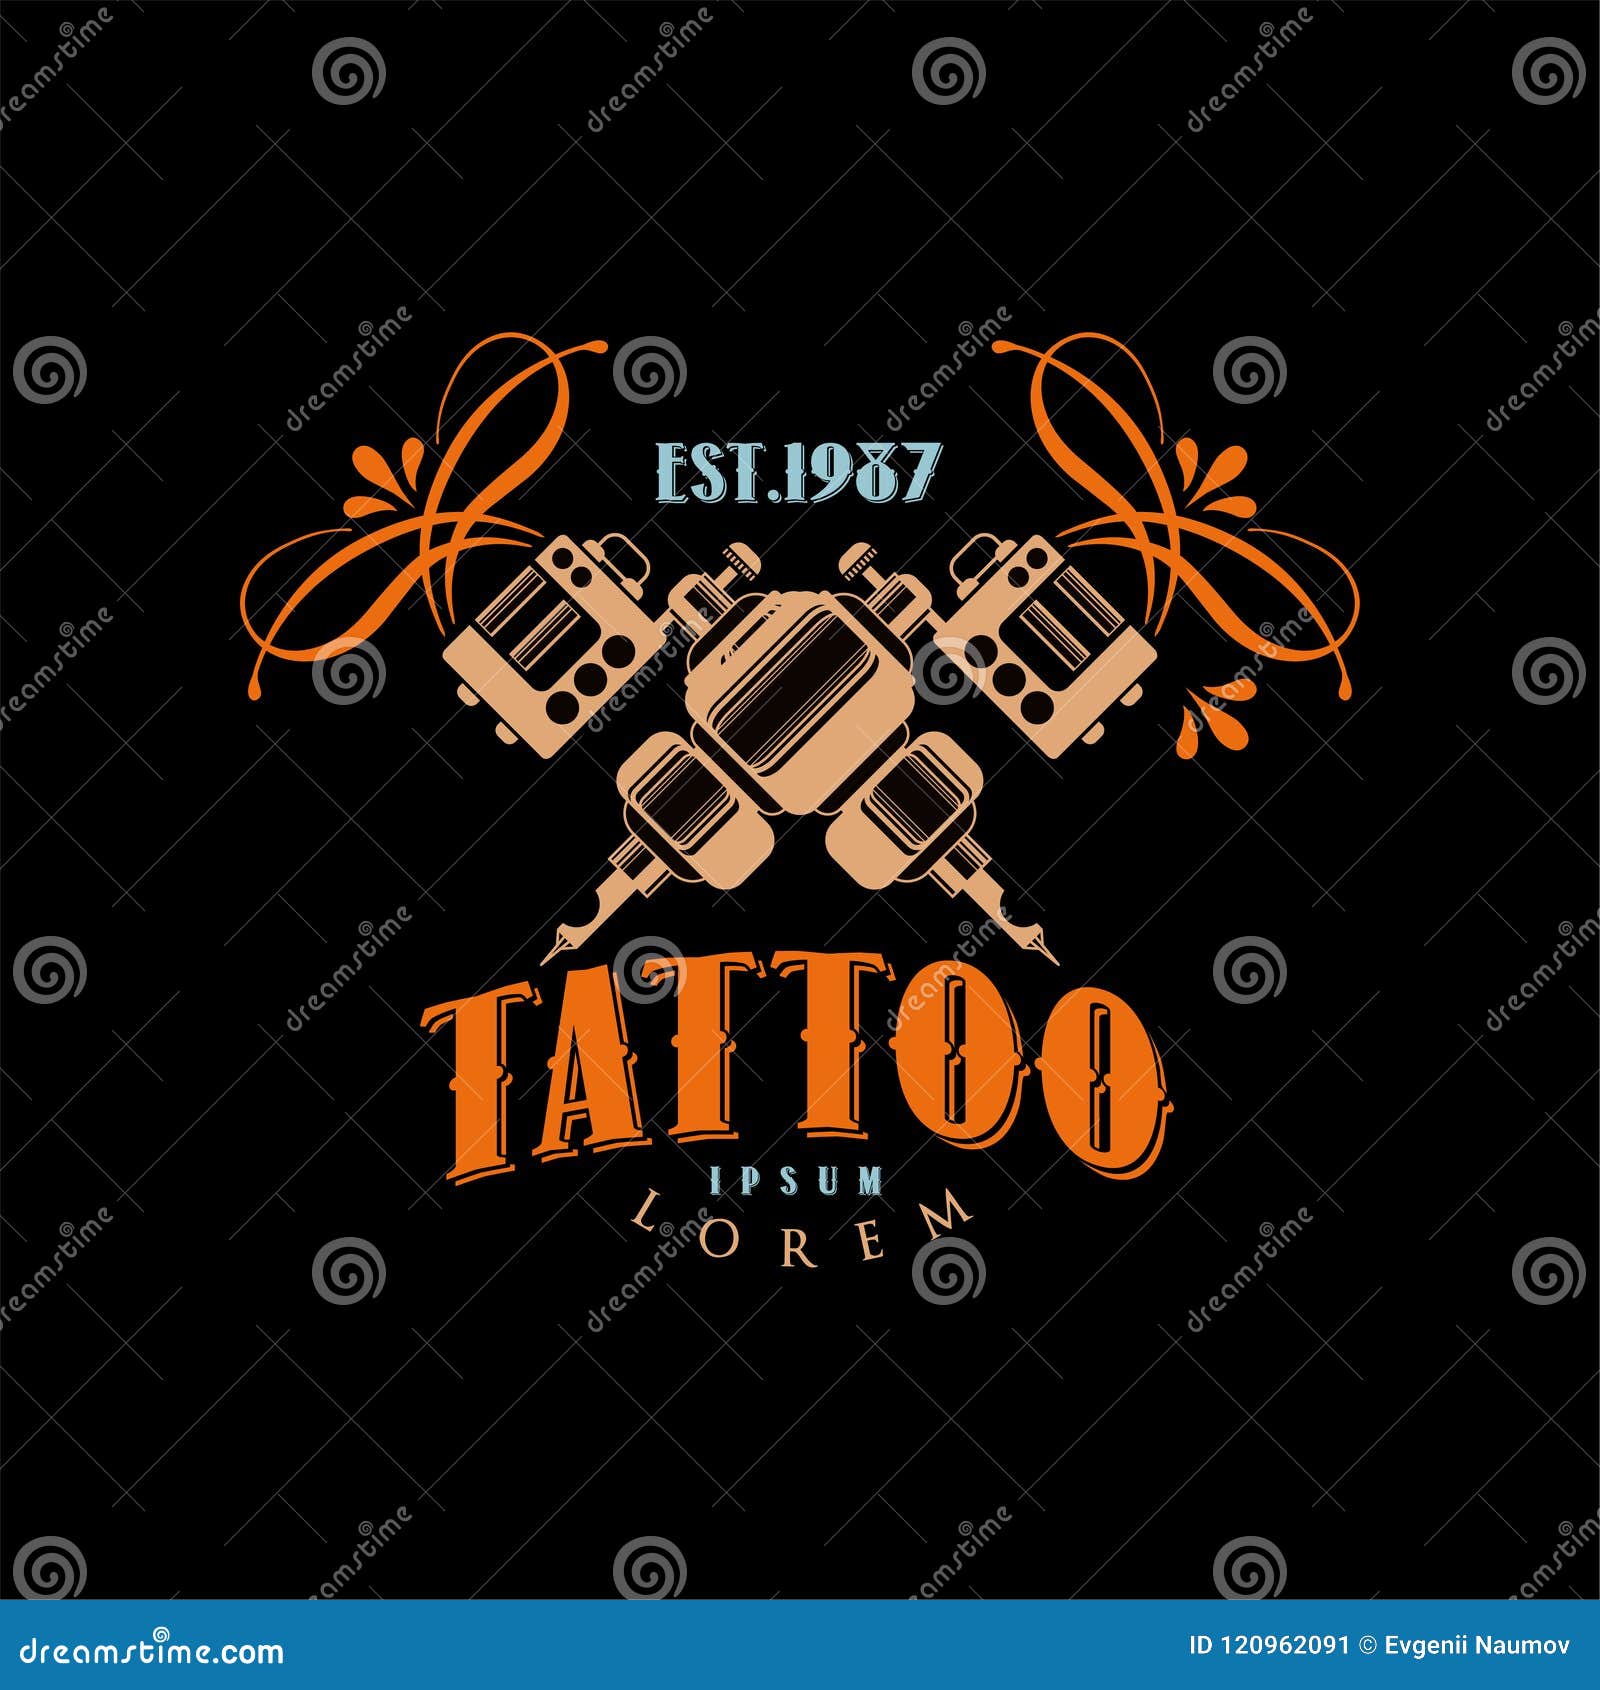 Tattoo Studio Logo Design Template Estd 1987, Retro Styled Emblem with ...